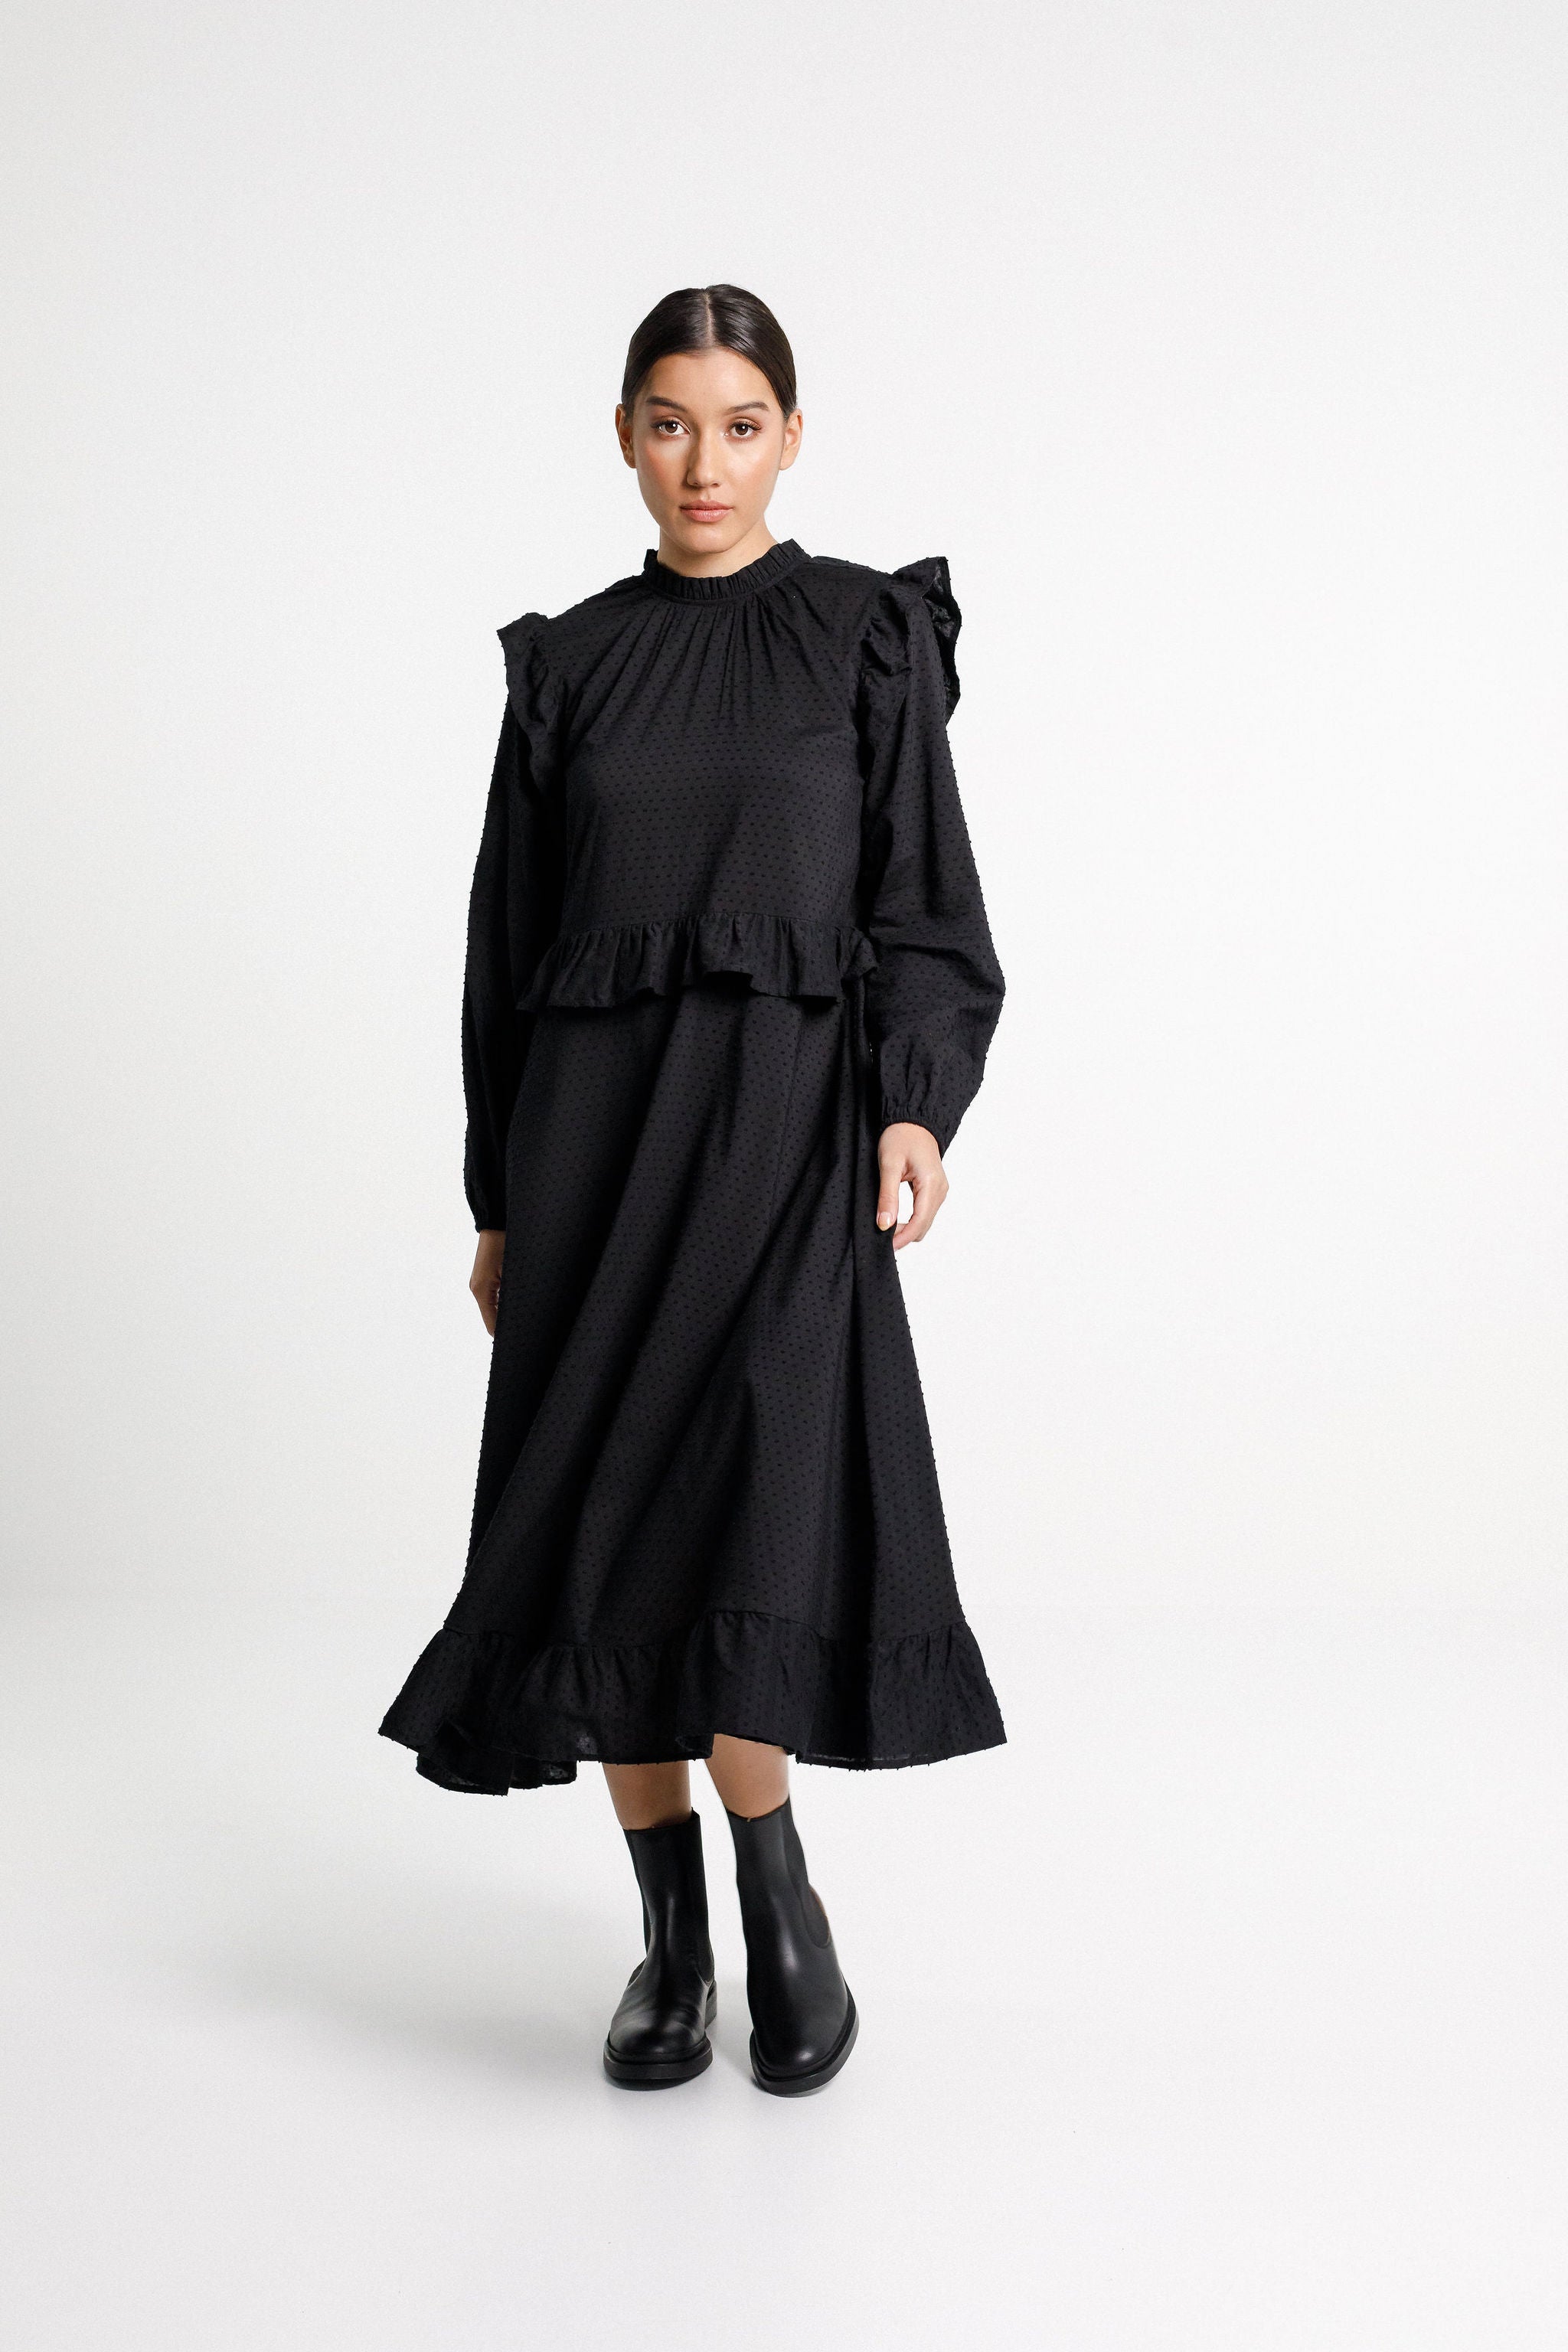 Evita Dress - Sale - Black Bobble